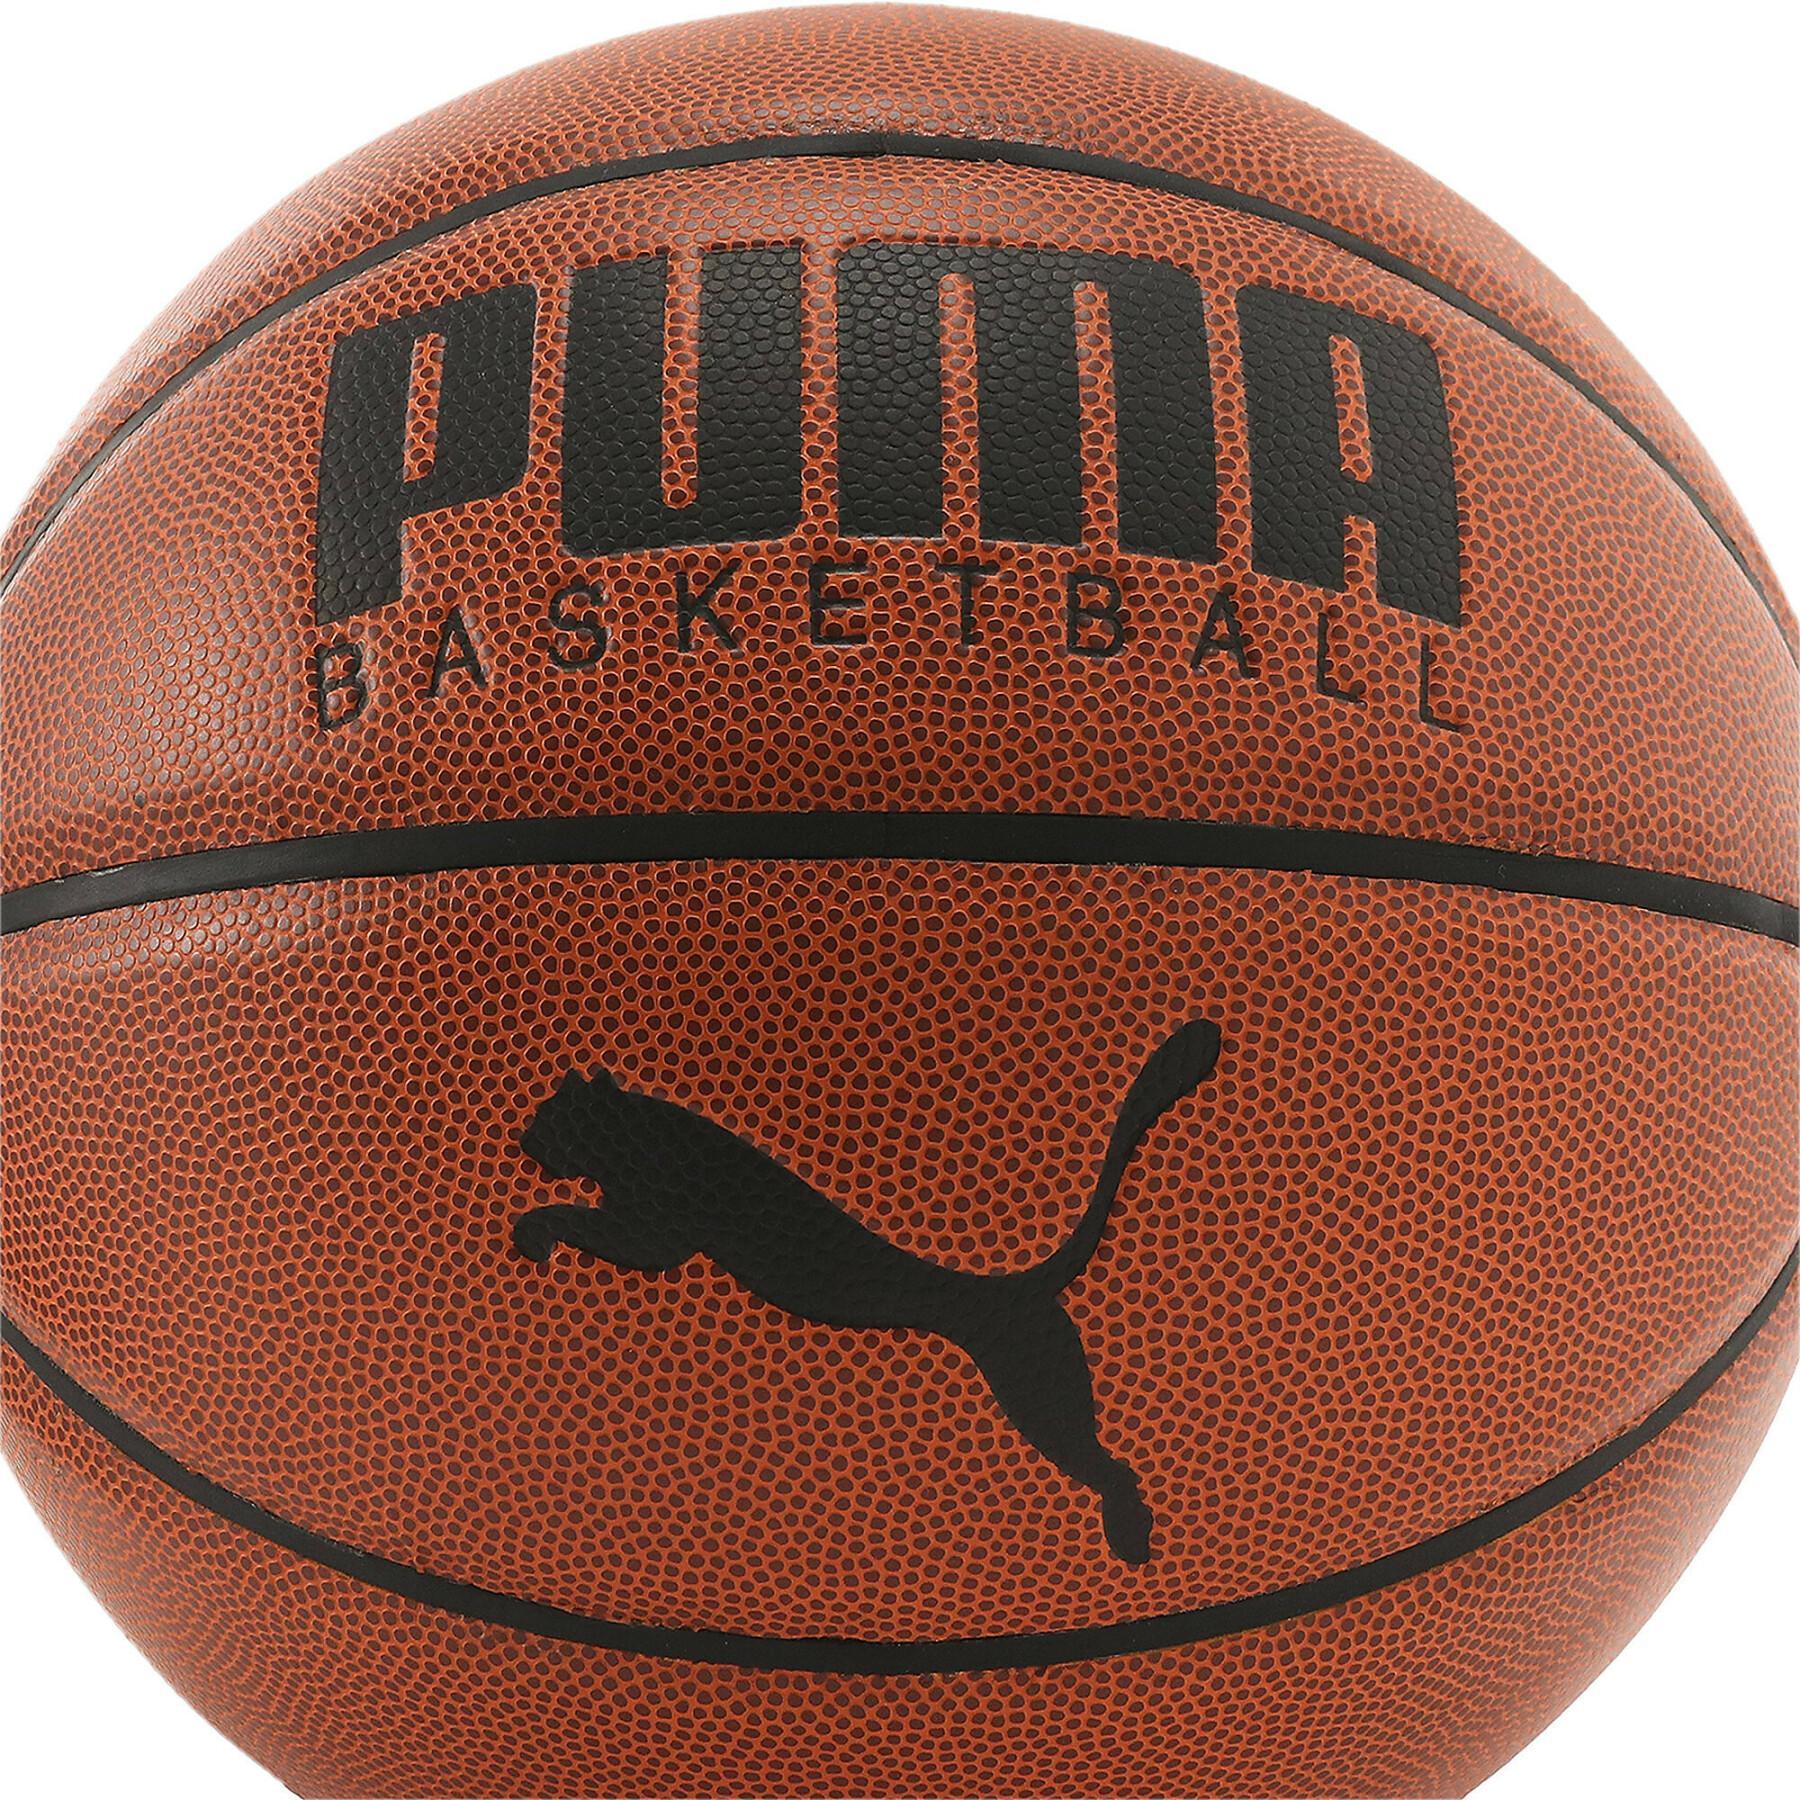 Basketbal Puma Basketball Top